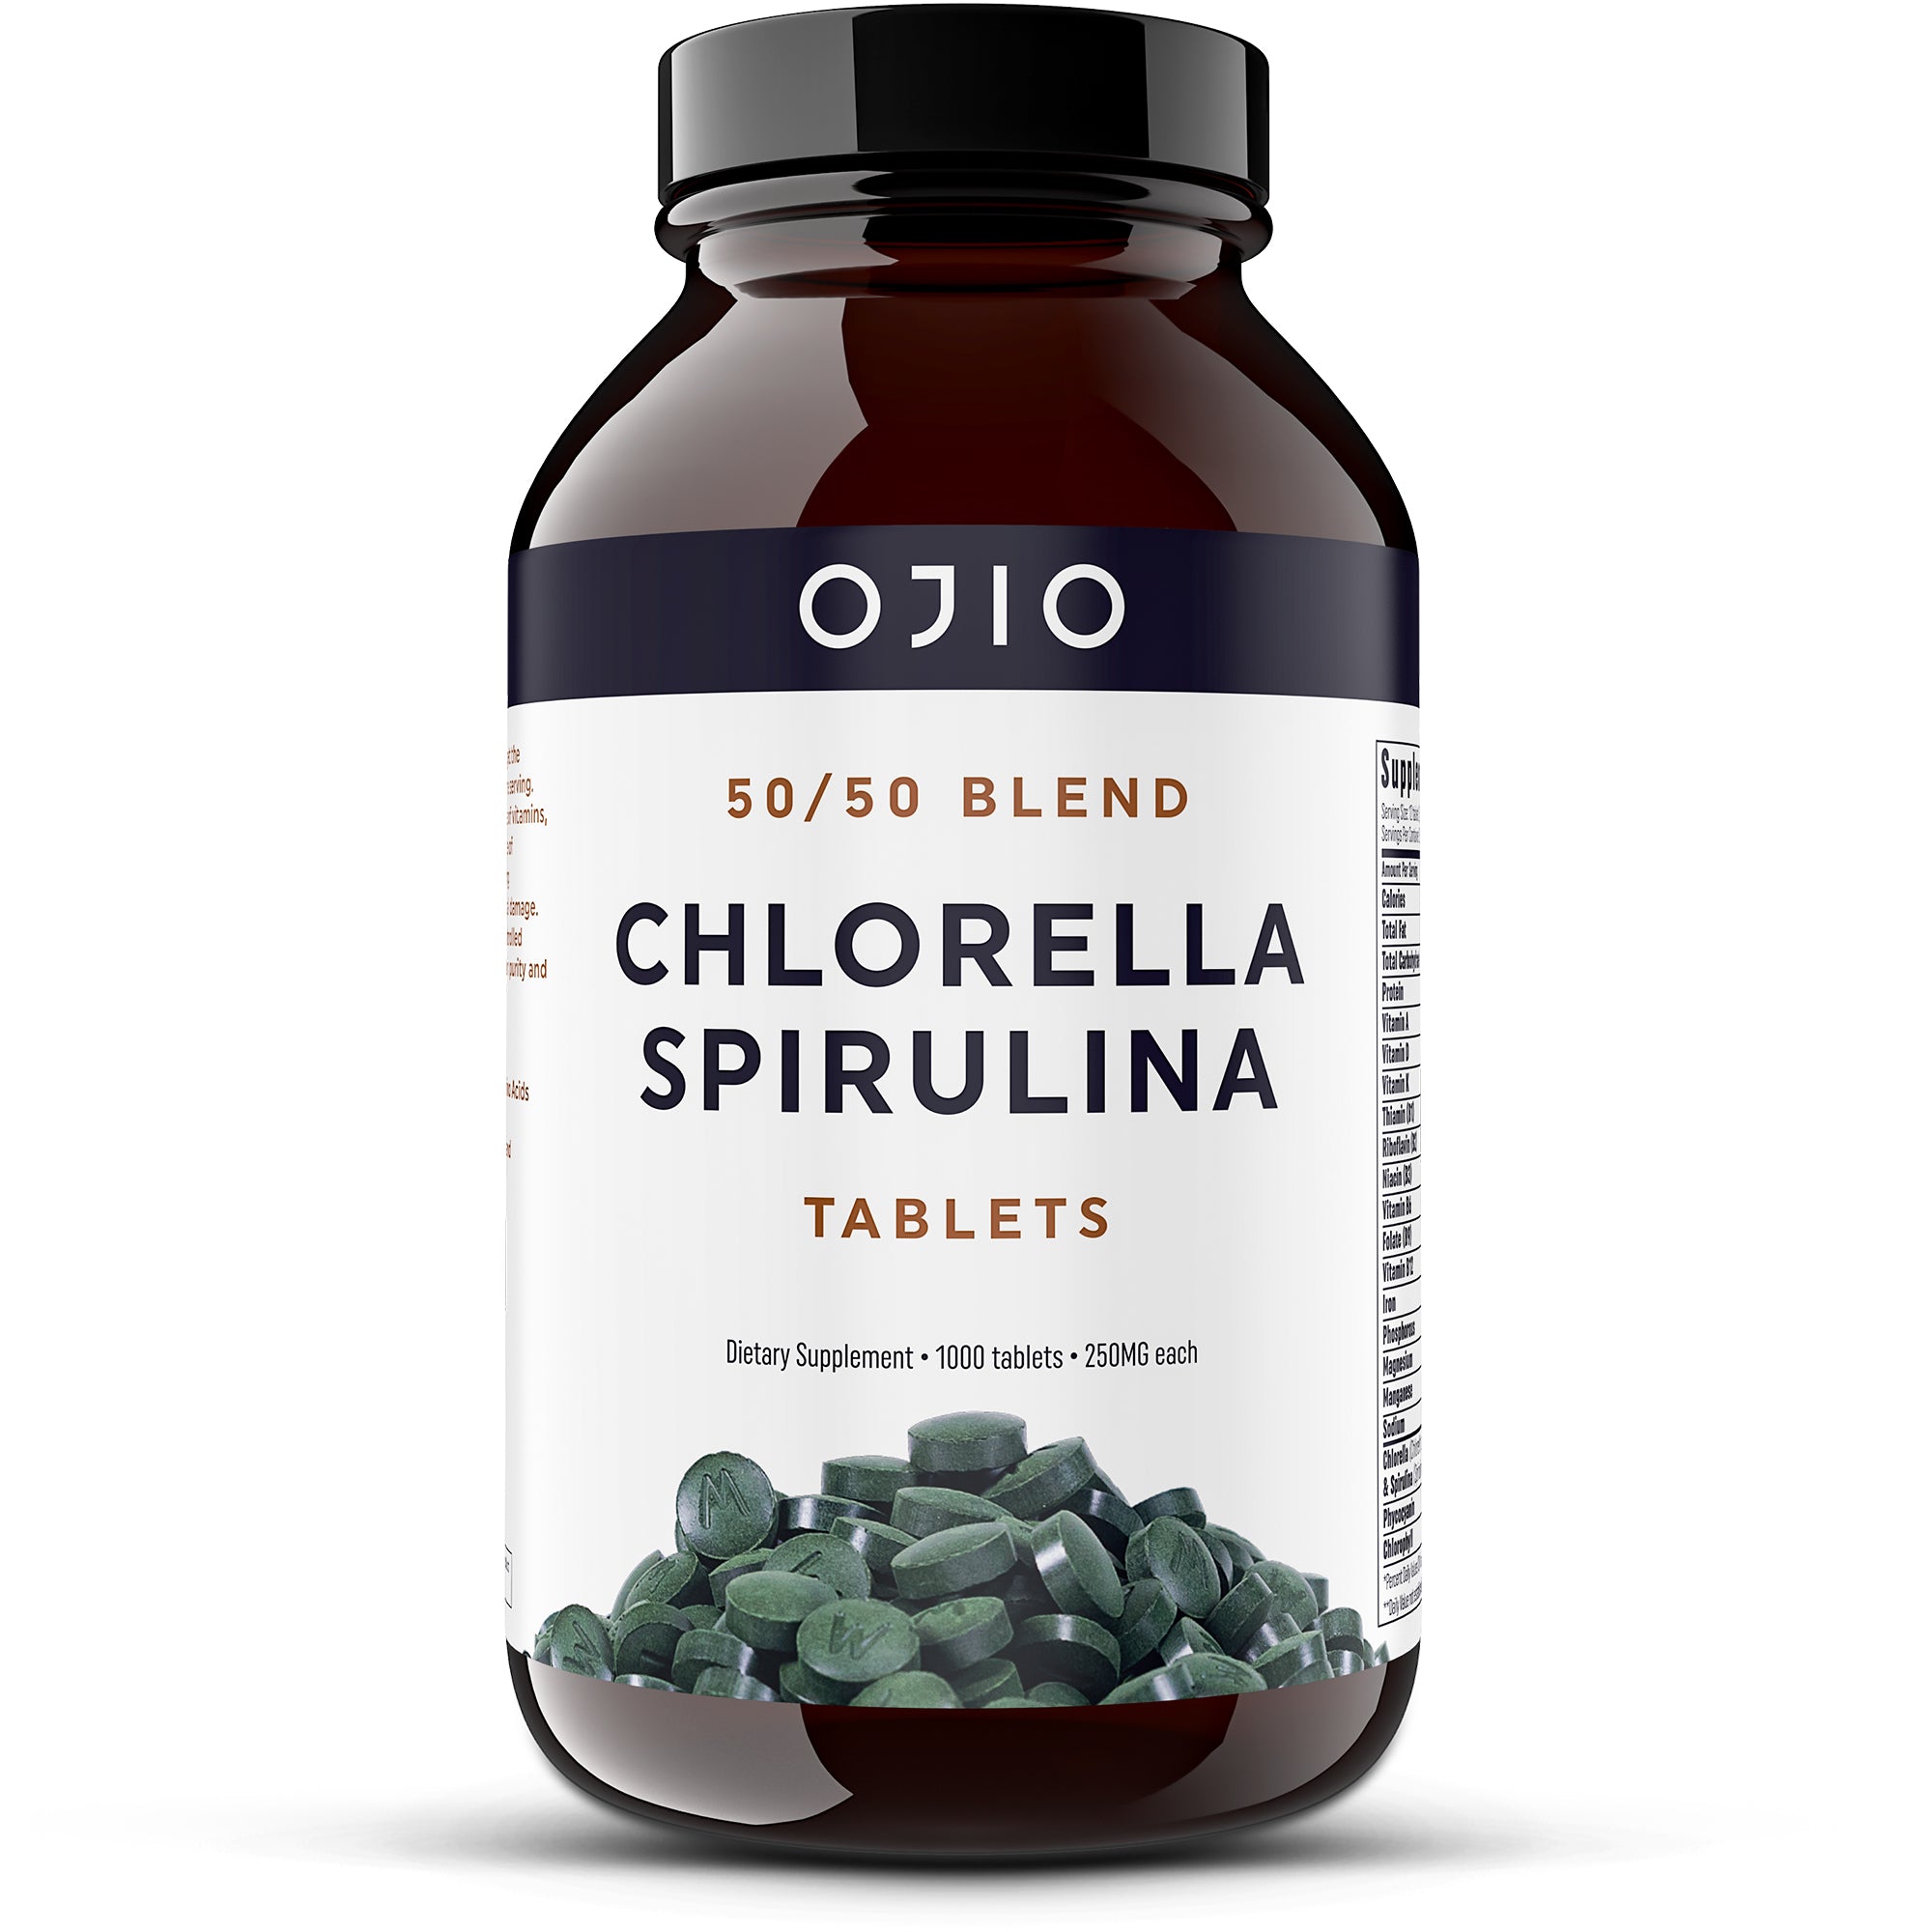 OJIO Chlorella-Spirulina Tablets - Organic Superfood Supplement